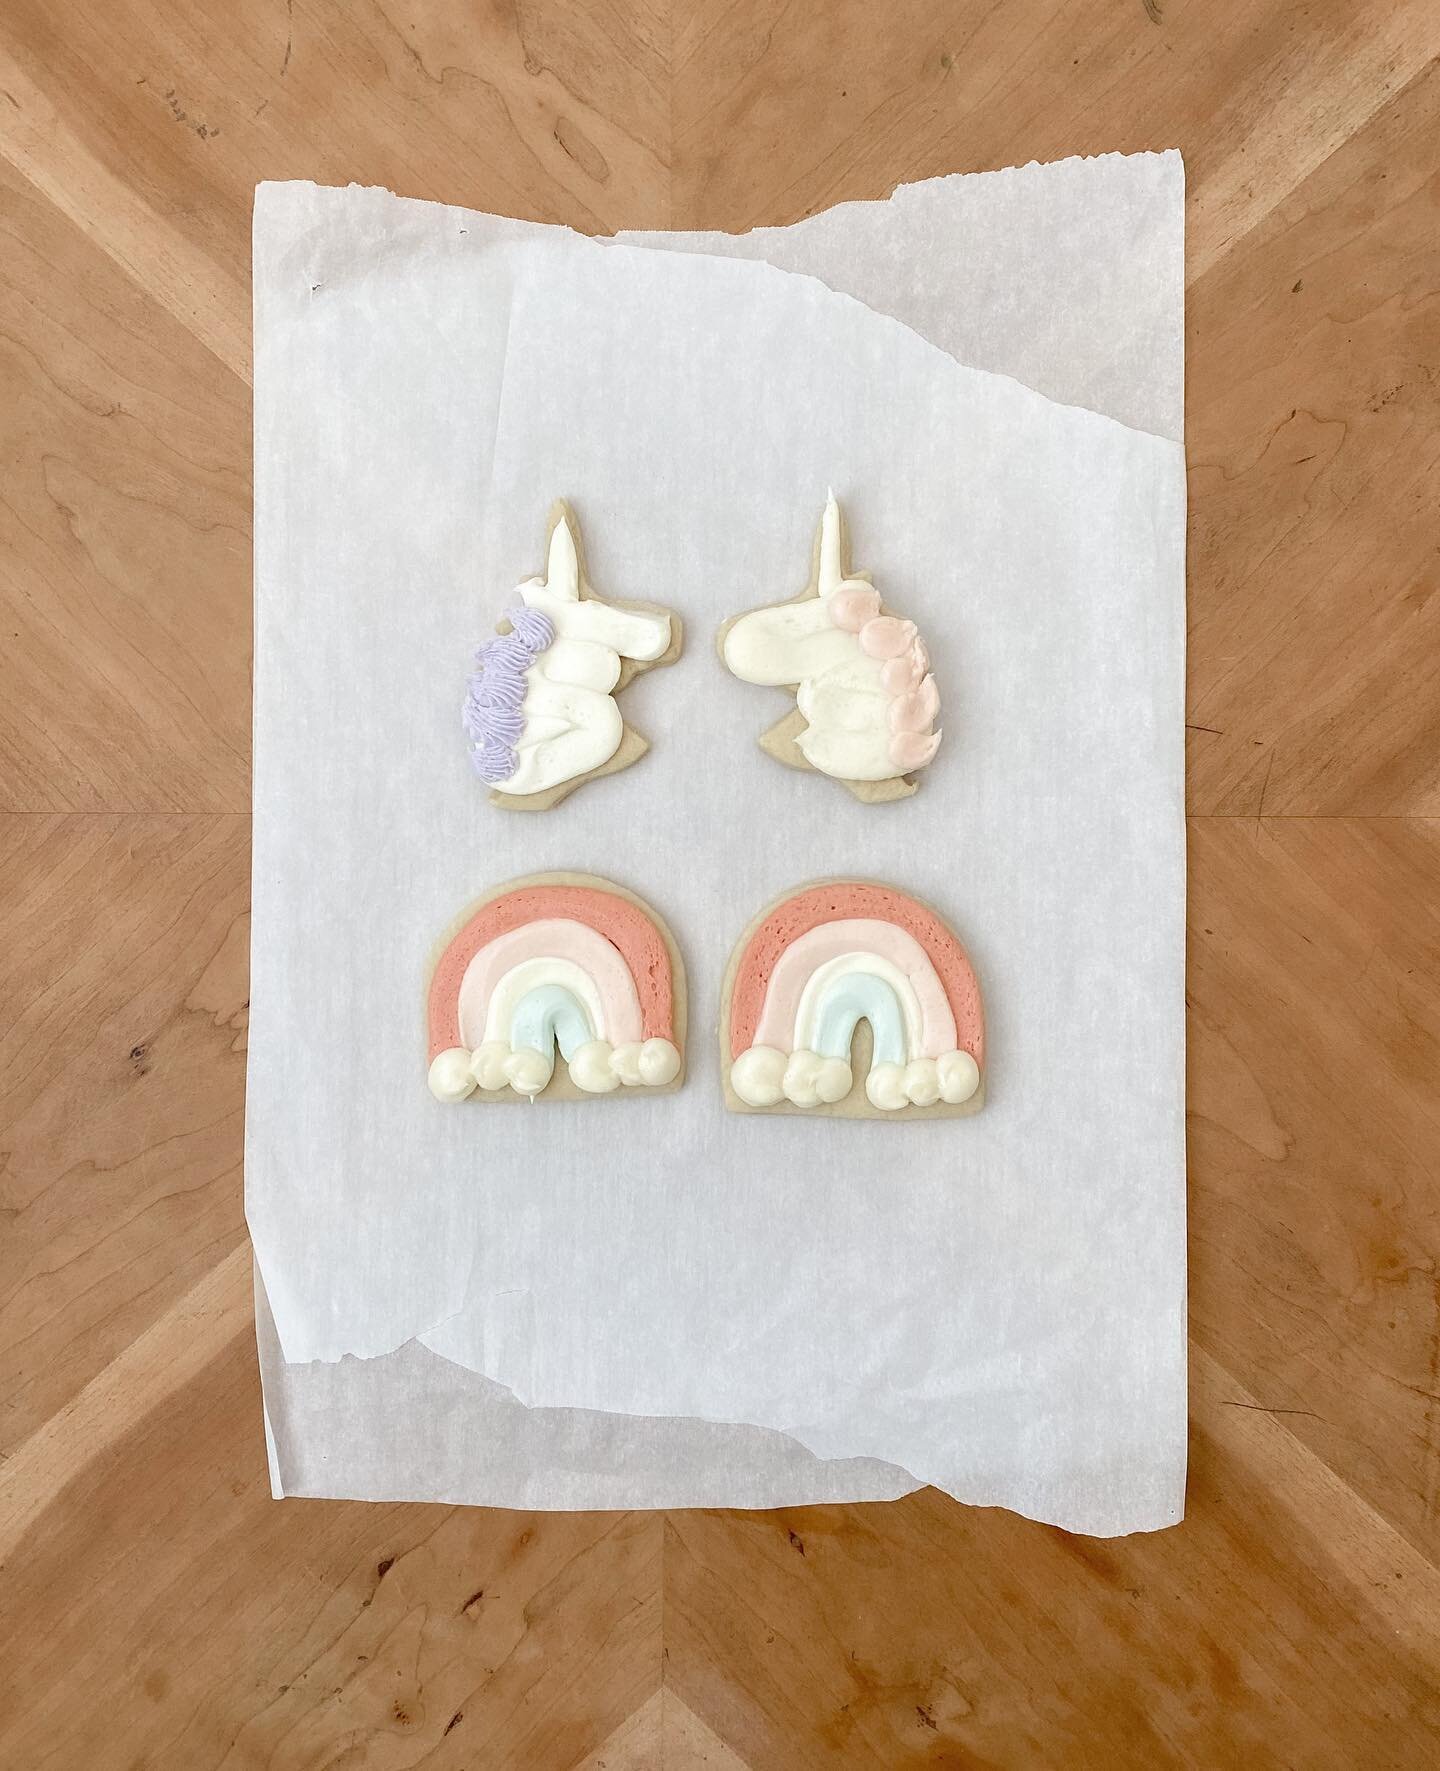 Unicorn &amp; Rainbow Cookies ✨ 

It doesn&rsquo;t get more magical than Unicorns &amp; Rainbows! 🌈🦄

#unicorncookies #arizonabaker #arizonabaker #arizonahomebaker #cookiesofinstagram #decoratedsugarcookies #sugarcookies #rainbowunicorns #wilton #c